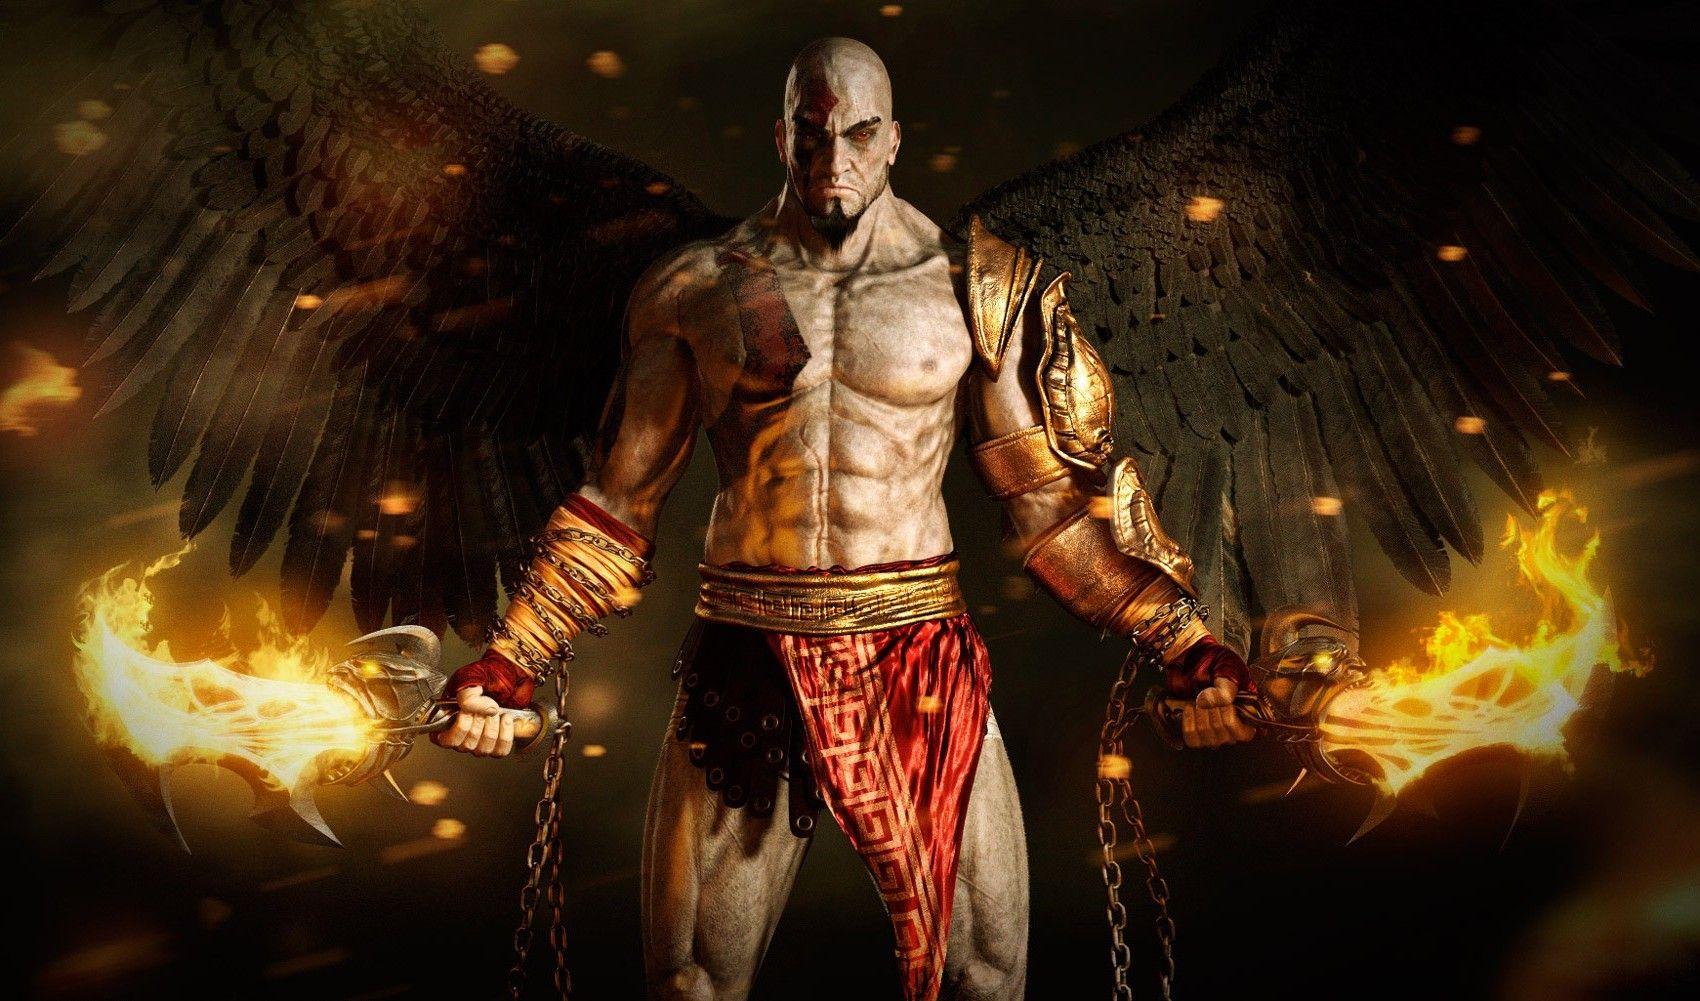 Wallpaper, 1700x1001 px, God of War, Kratos, video games, wings